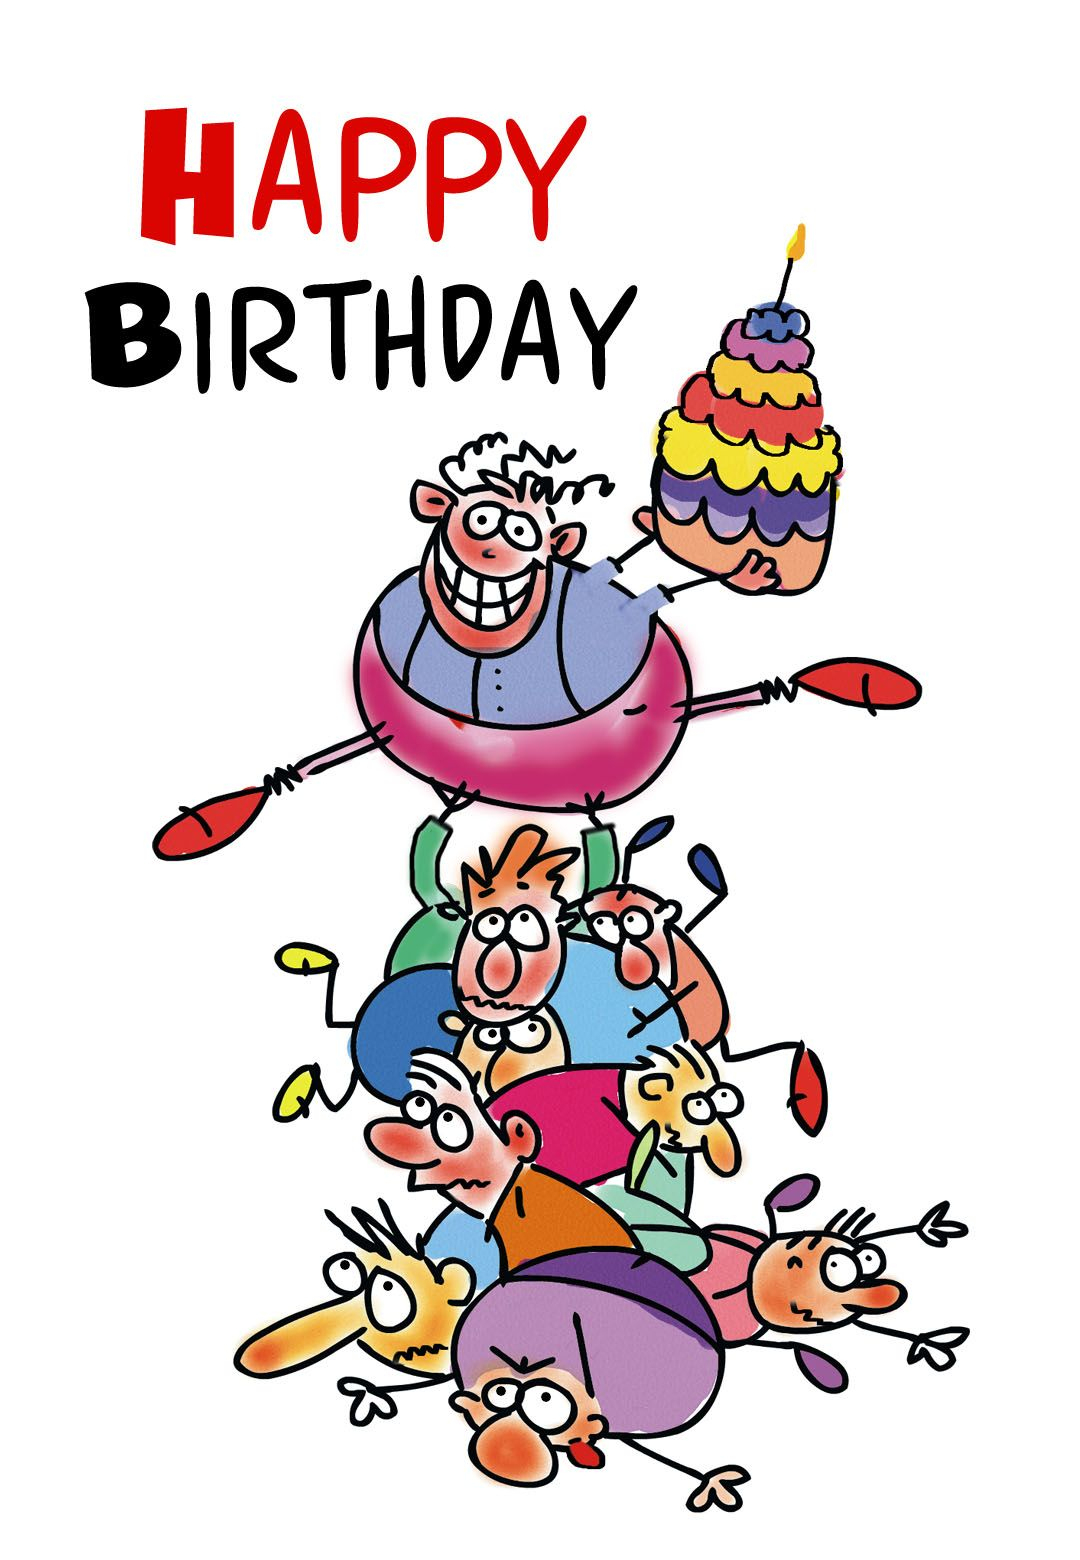 Free Printable Funny Birthday Greeting Card | Gifts To Make | Free - Free Printable Humorous Birthday Cards